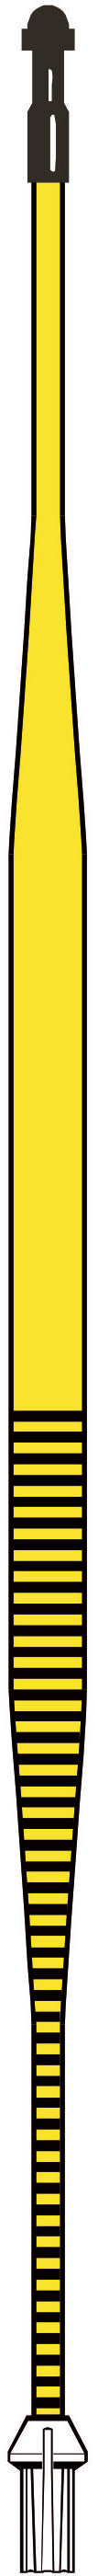 Tournament Flagstick 7.5' yellow w/ measuring tape